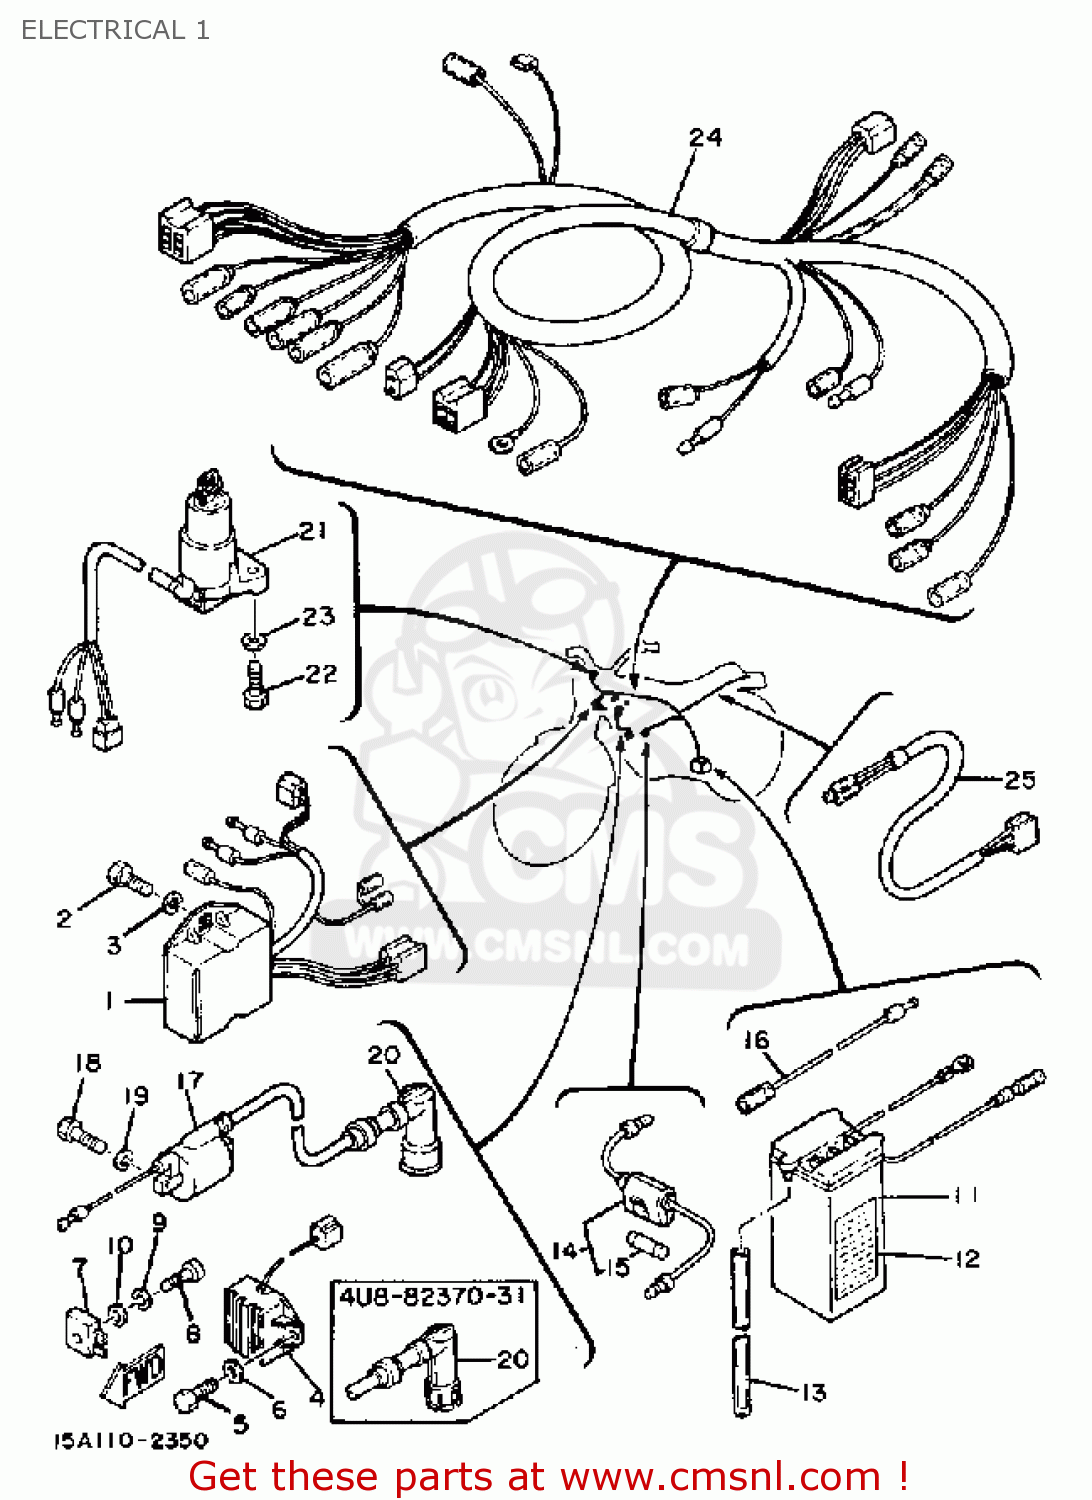 1982 yamaha xt200 wiring diagram